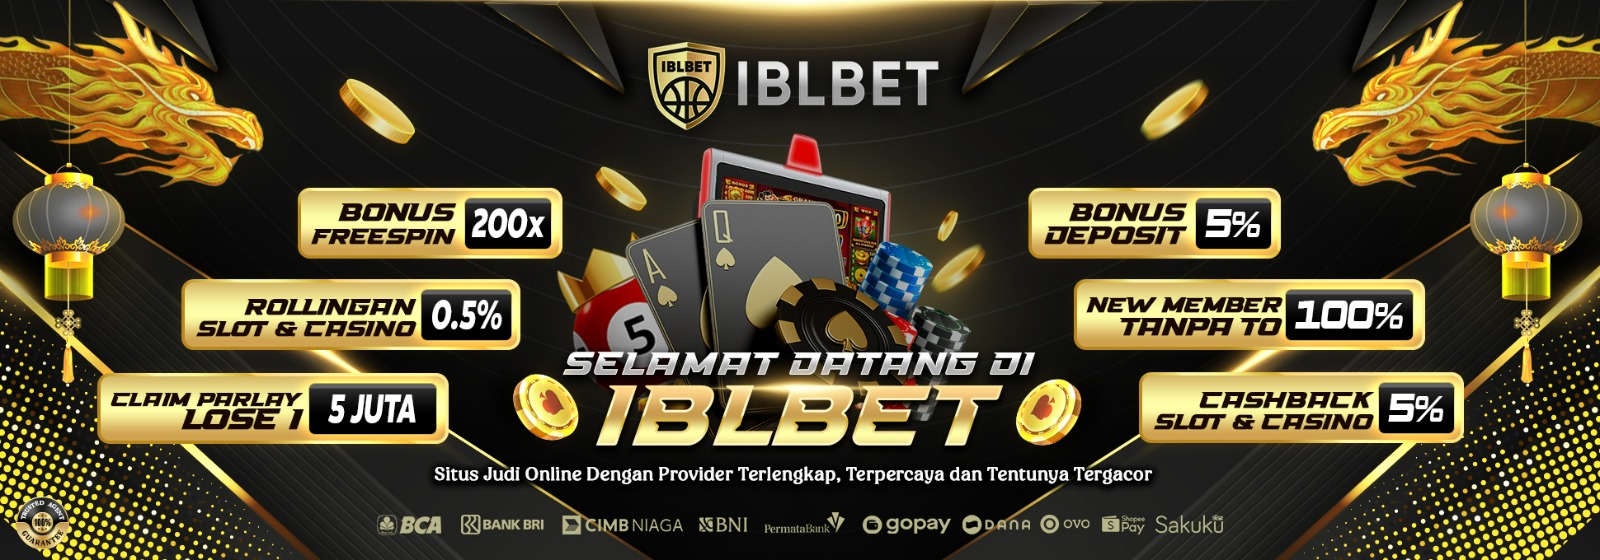 Situs iblbet Gacor